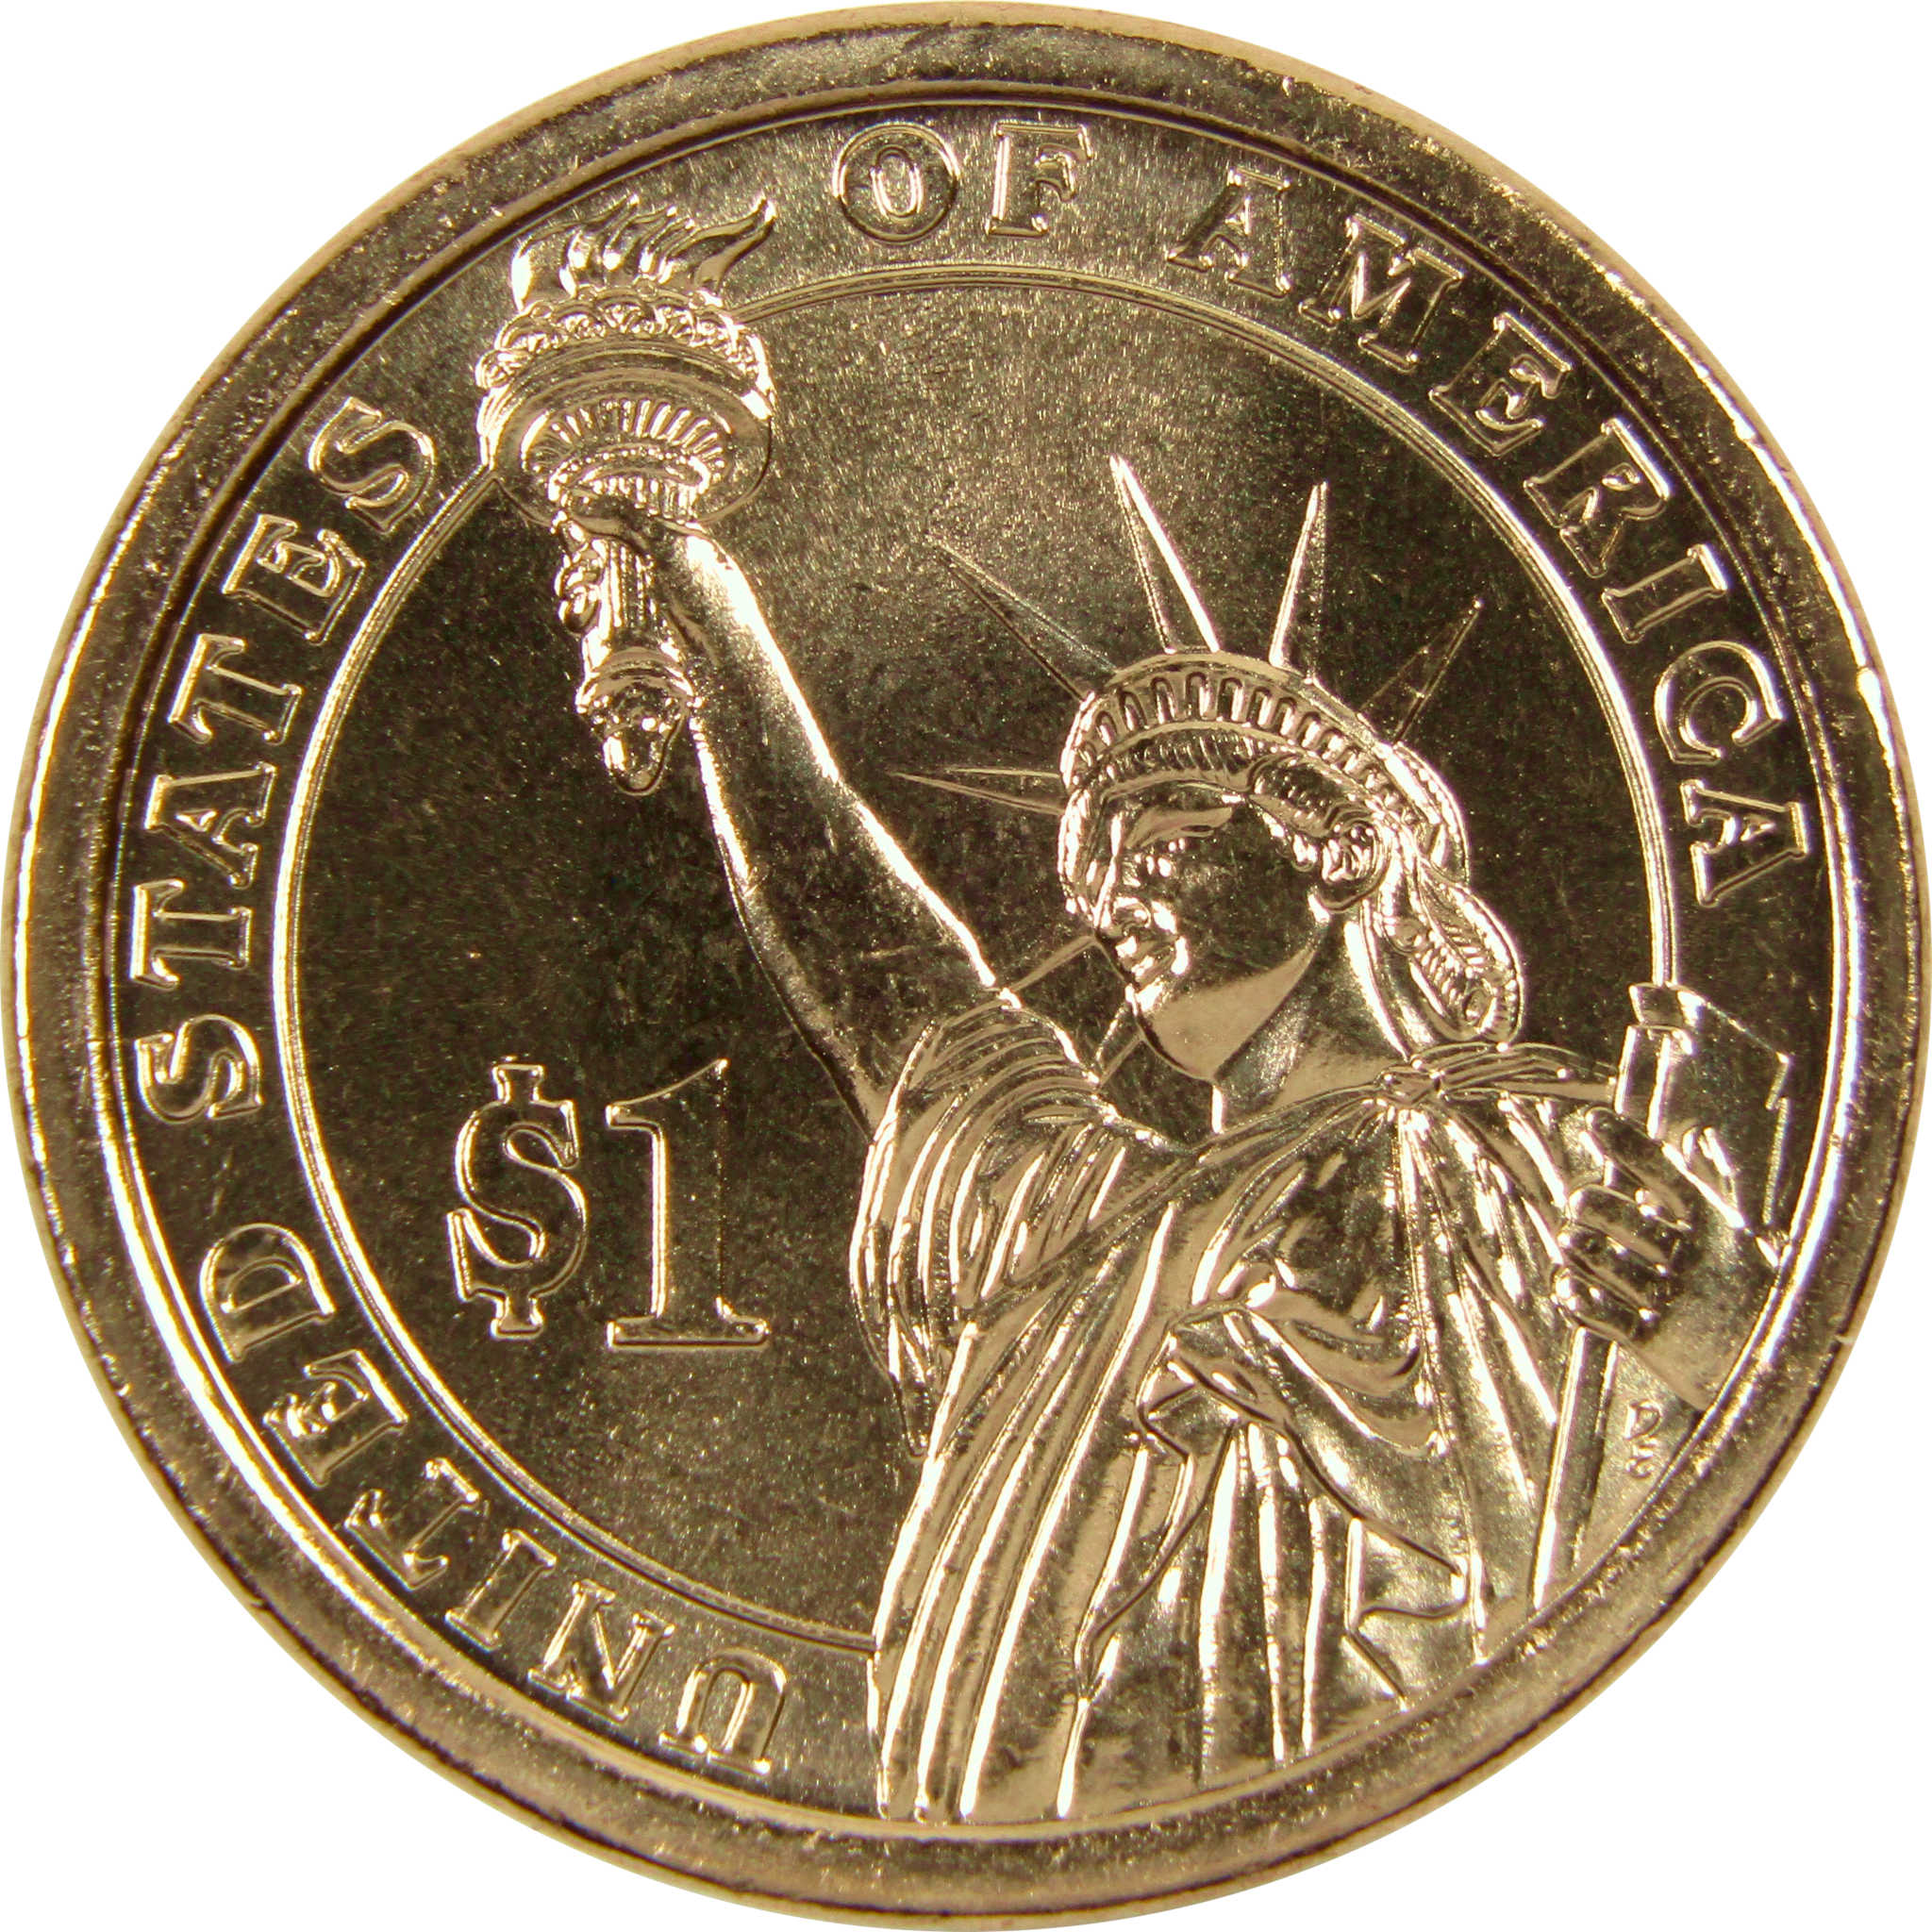 2013 P William H Taft Presidential Dollar BU Uncirculated $1 Coin